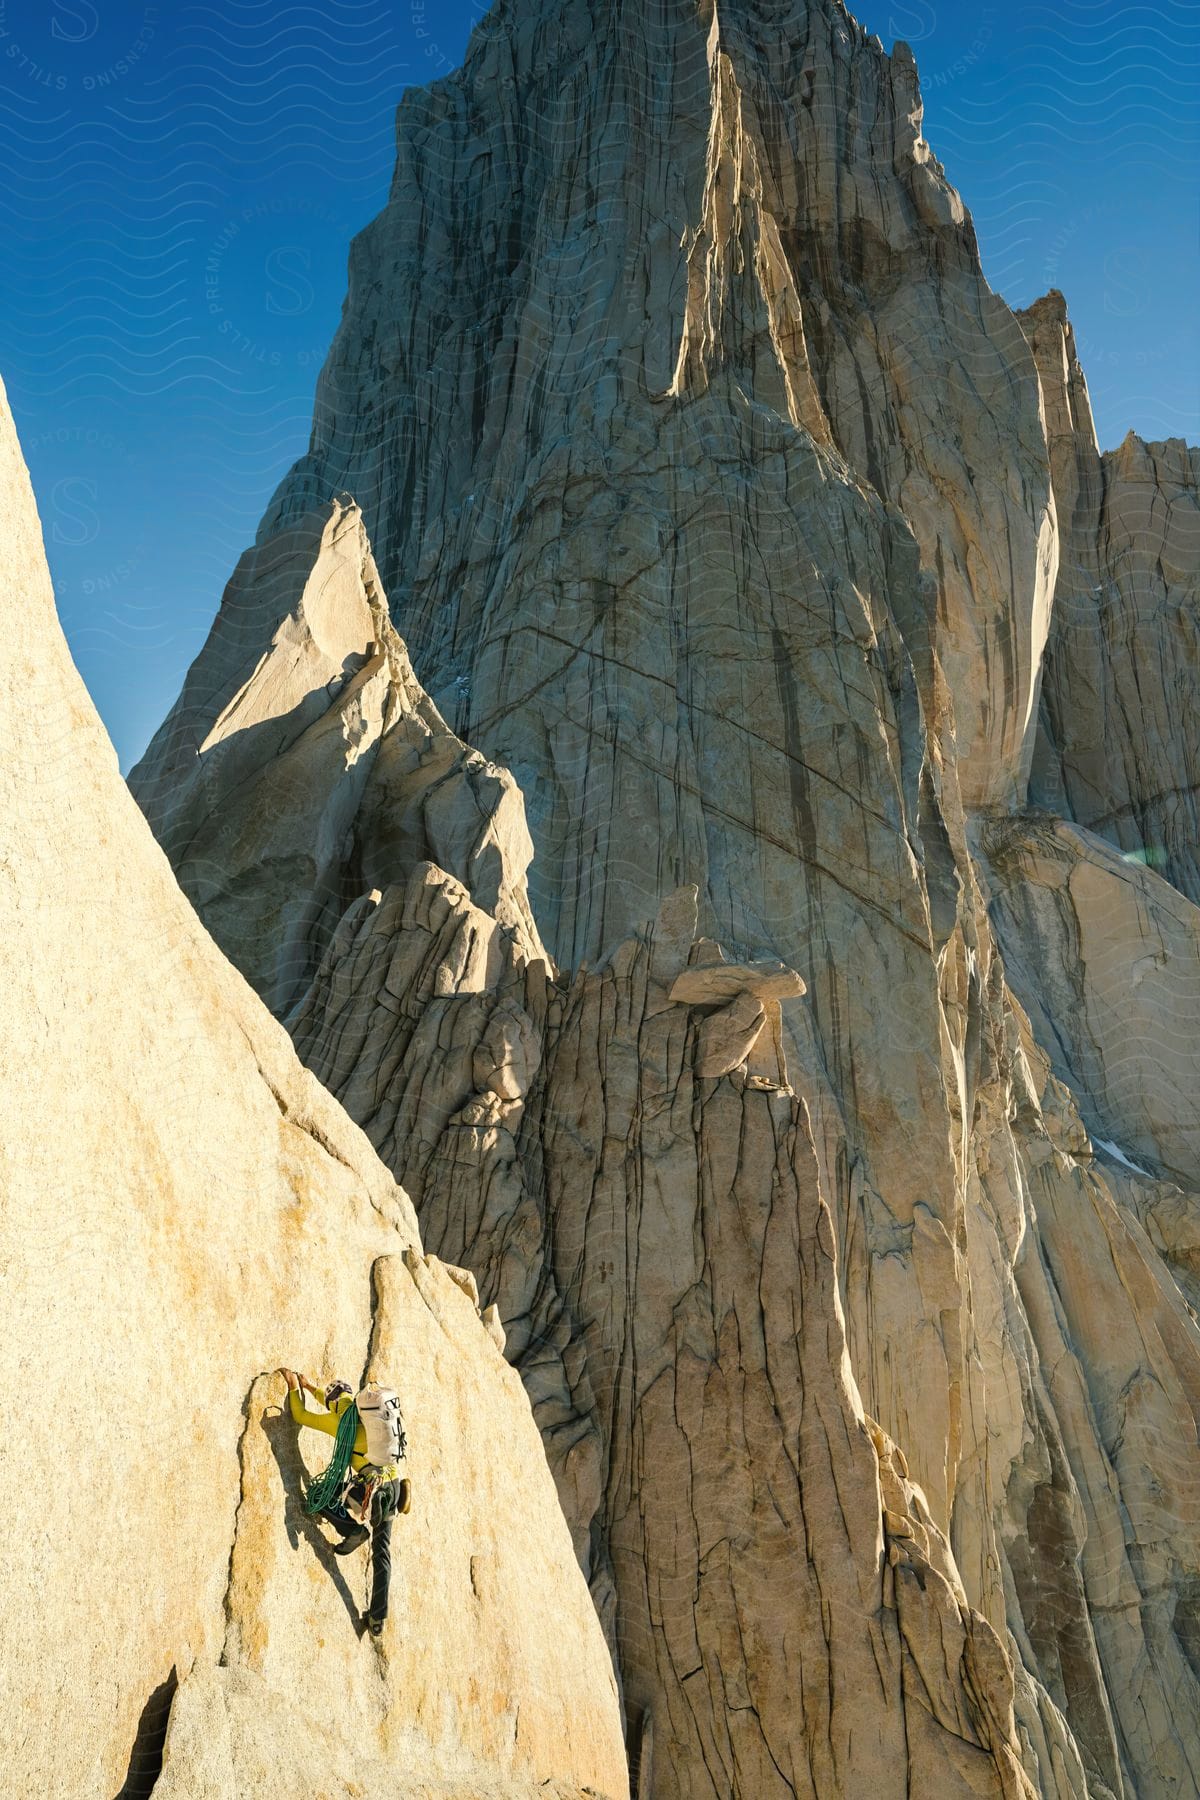 A man climbing a rocky hill in a natural landscape